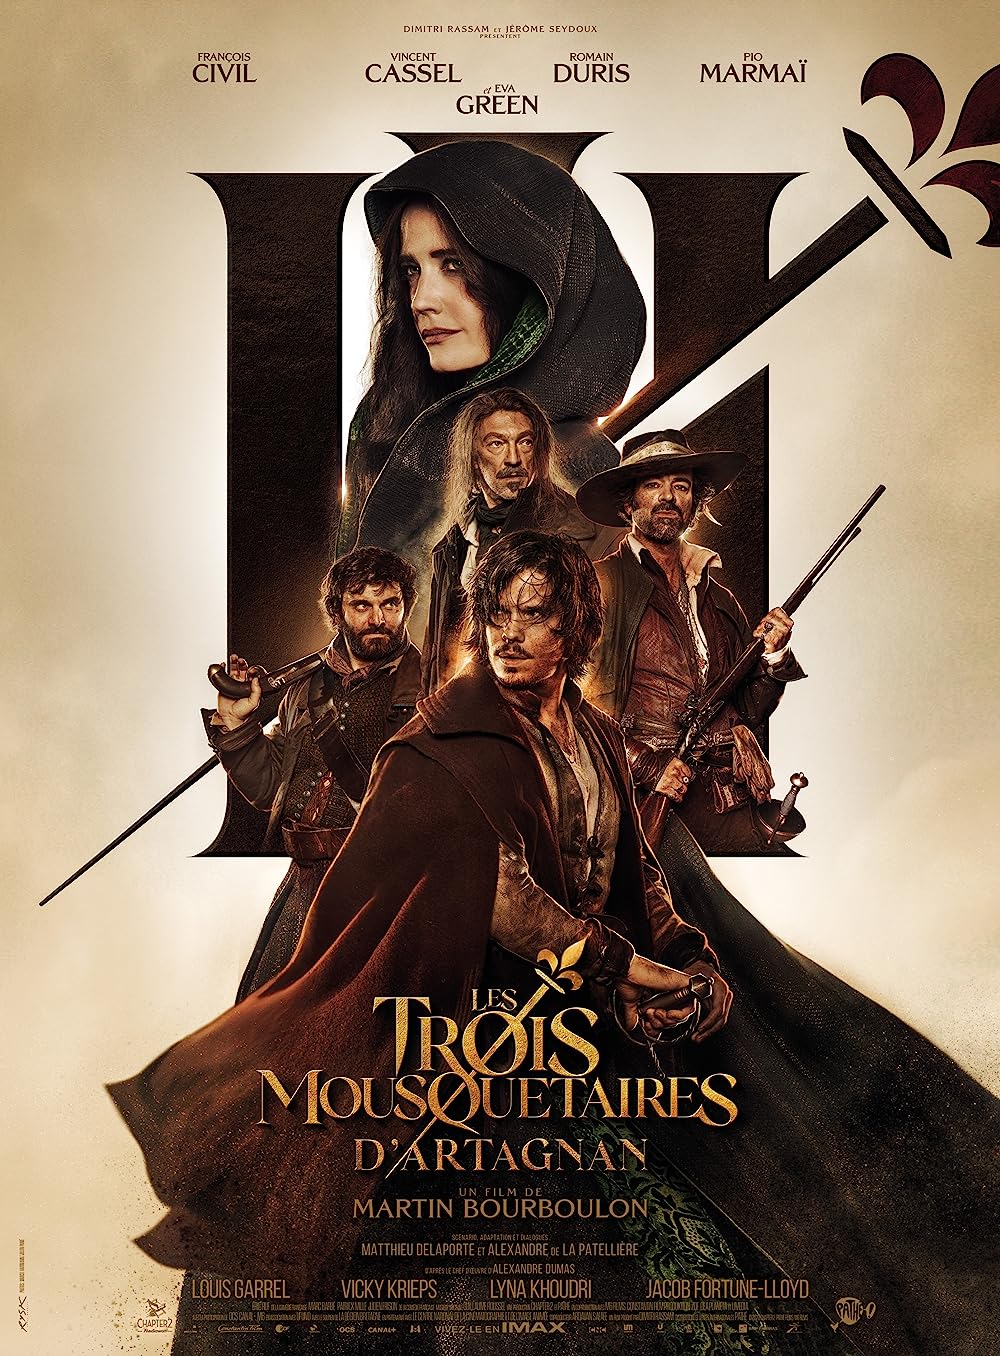 Stiahni si Filmy CZ/SK dabing Tři mušketýři: D'Artagnan / Les Trois Mousquetaires: D'Artagnan (2023)(CZ)[WebRip][1080p] = CSFD 75%